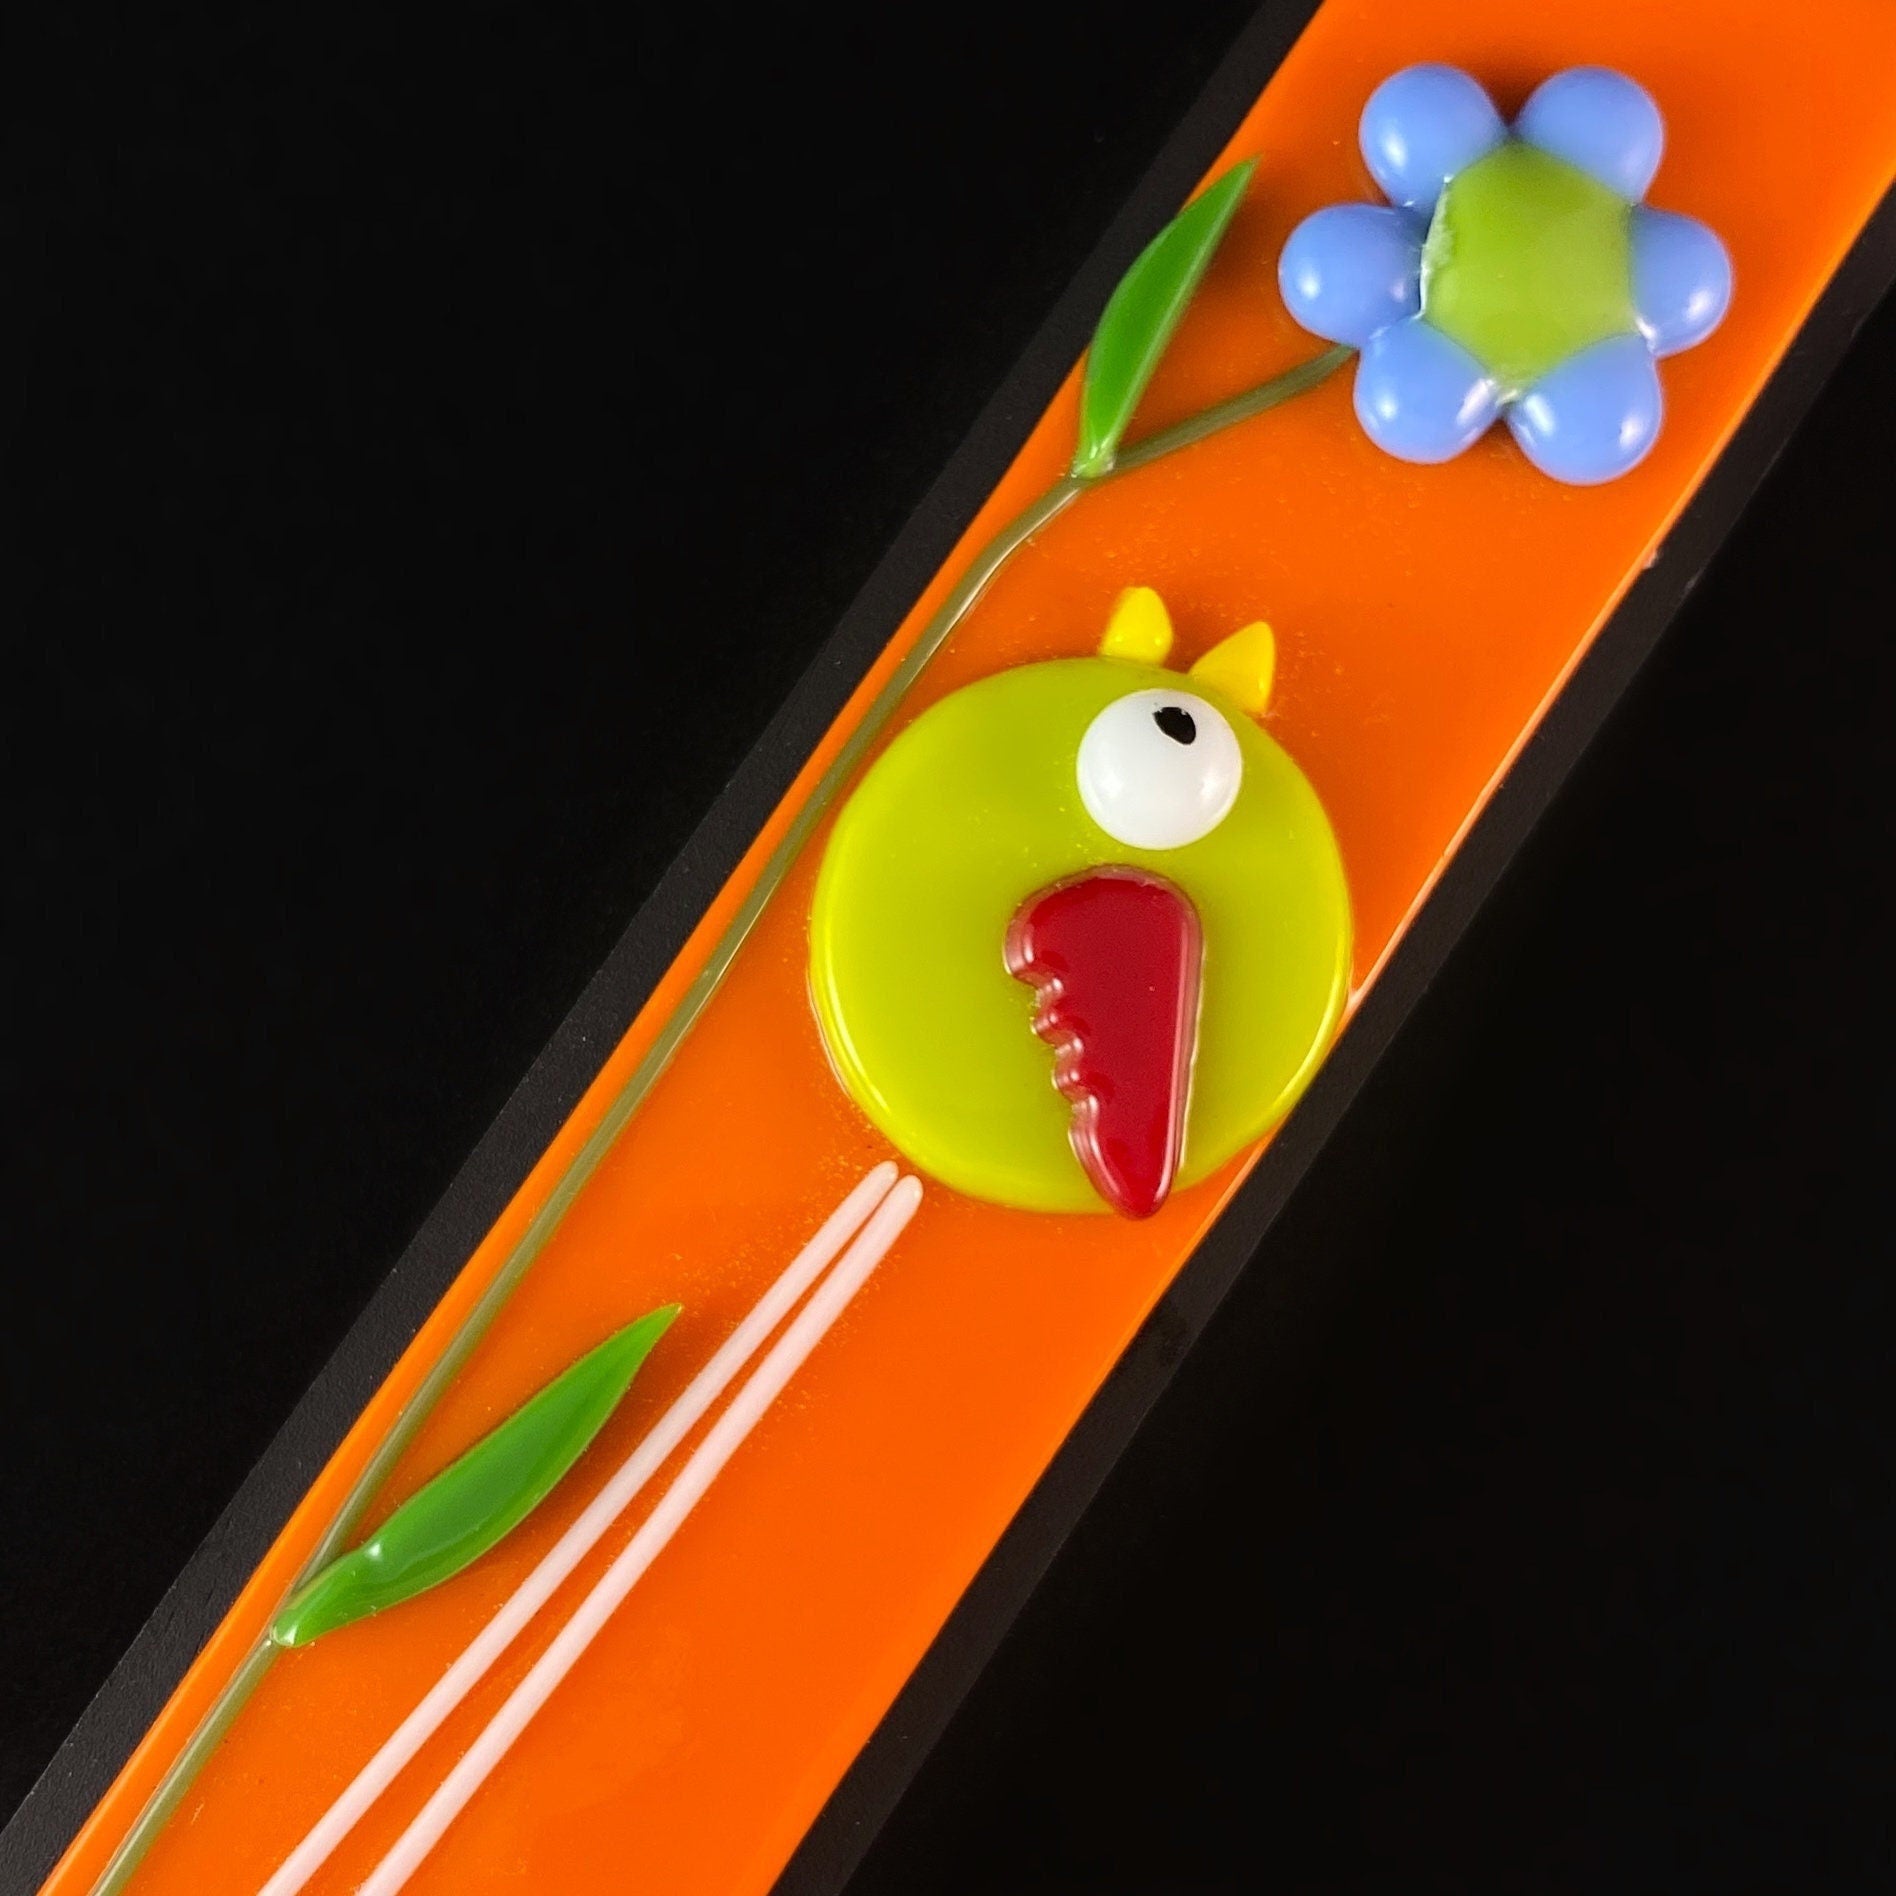 Long Legged  Bird With Flower Handmade Glass Wall Decor, Orange- Made in USA